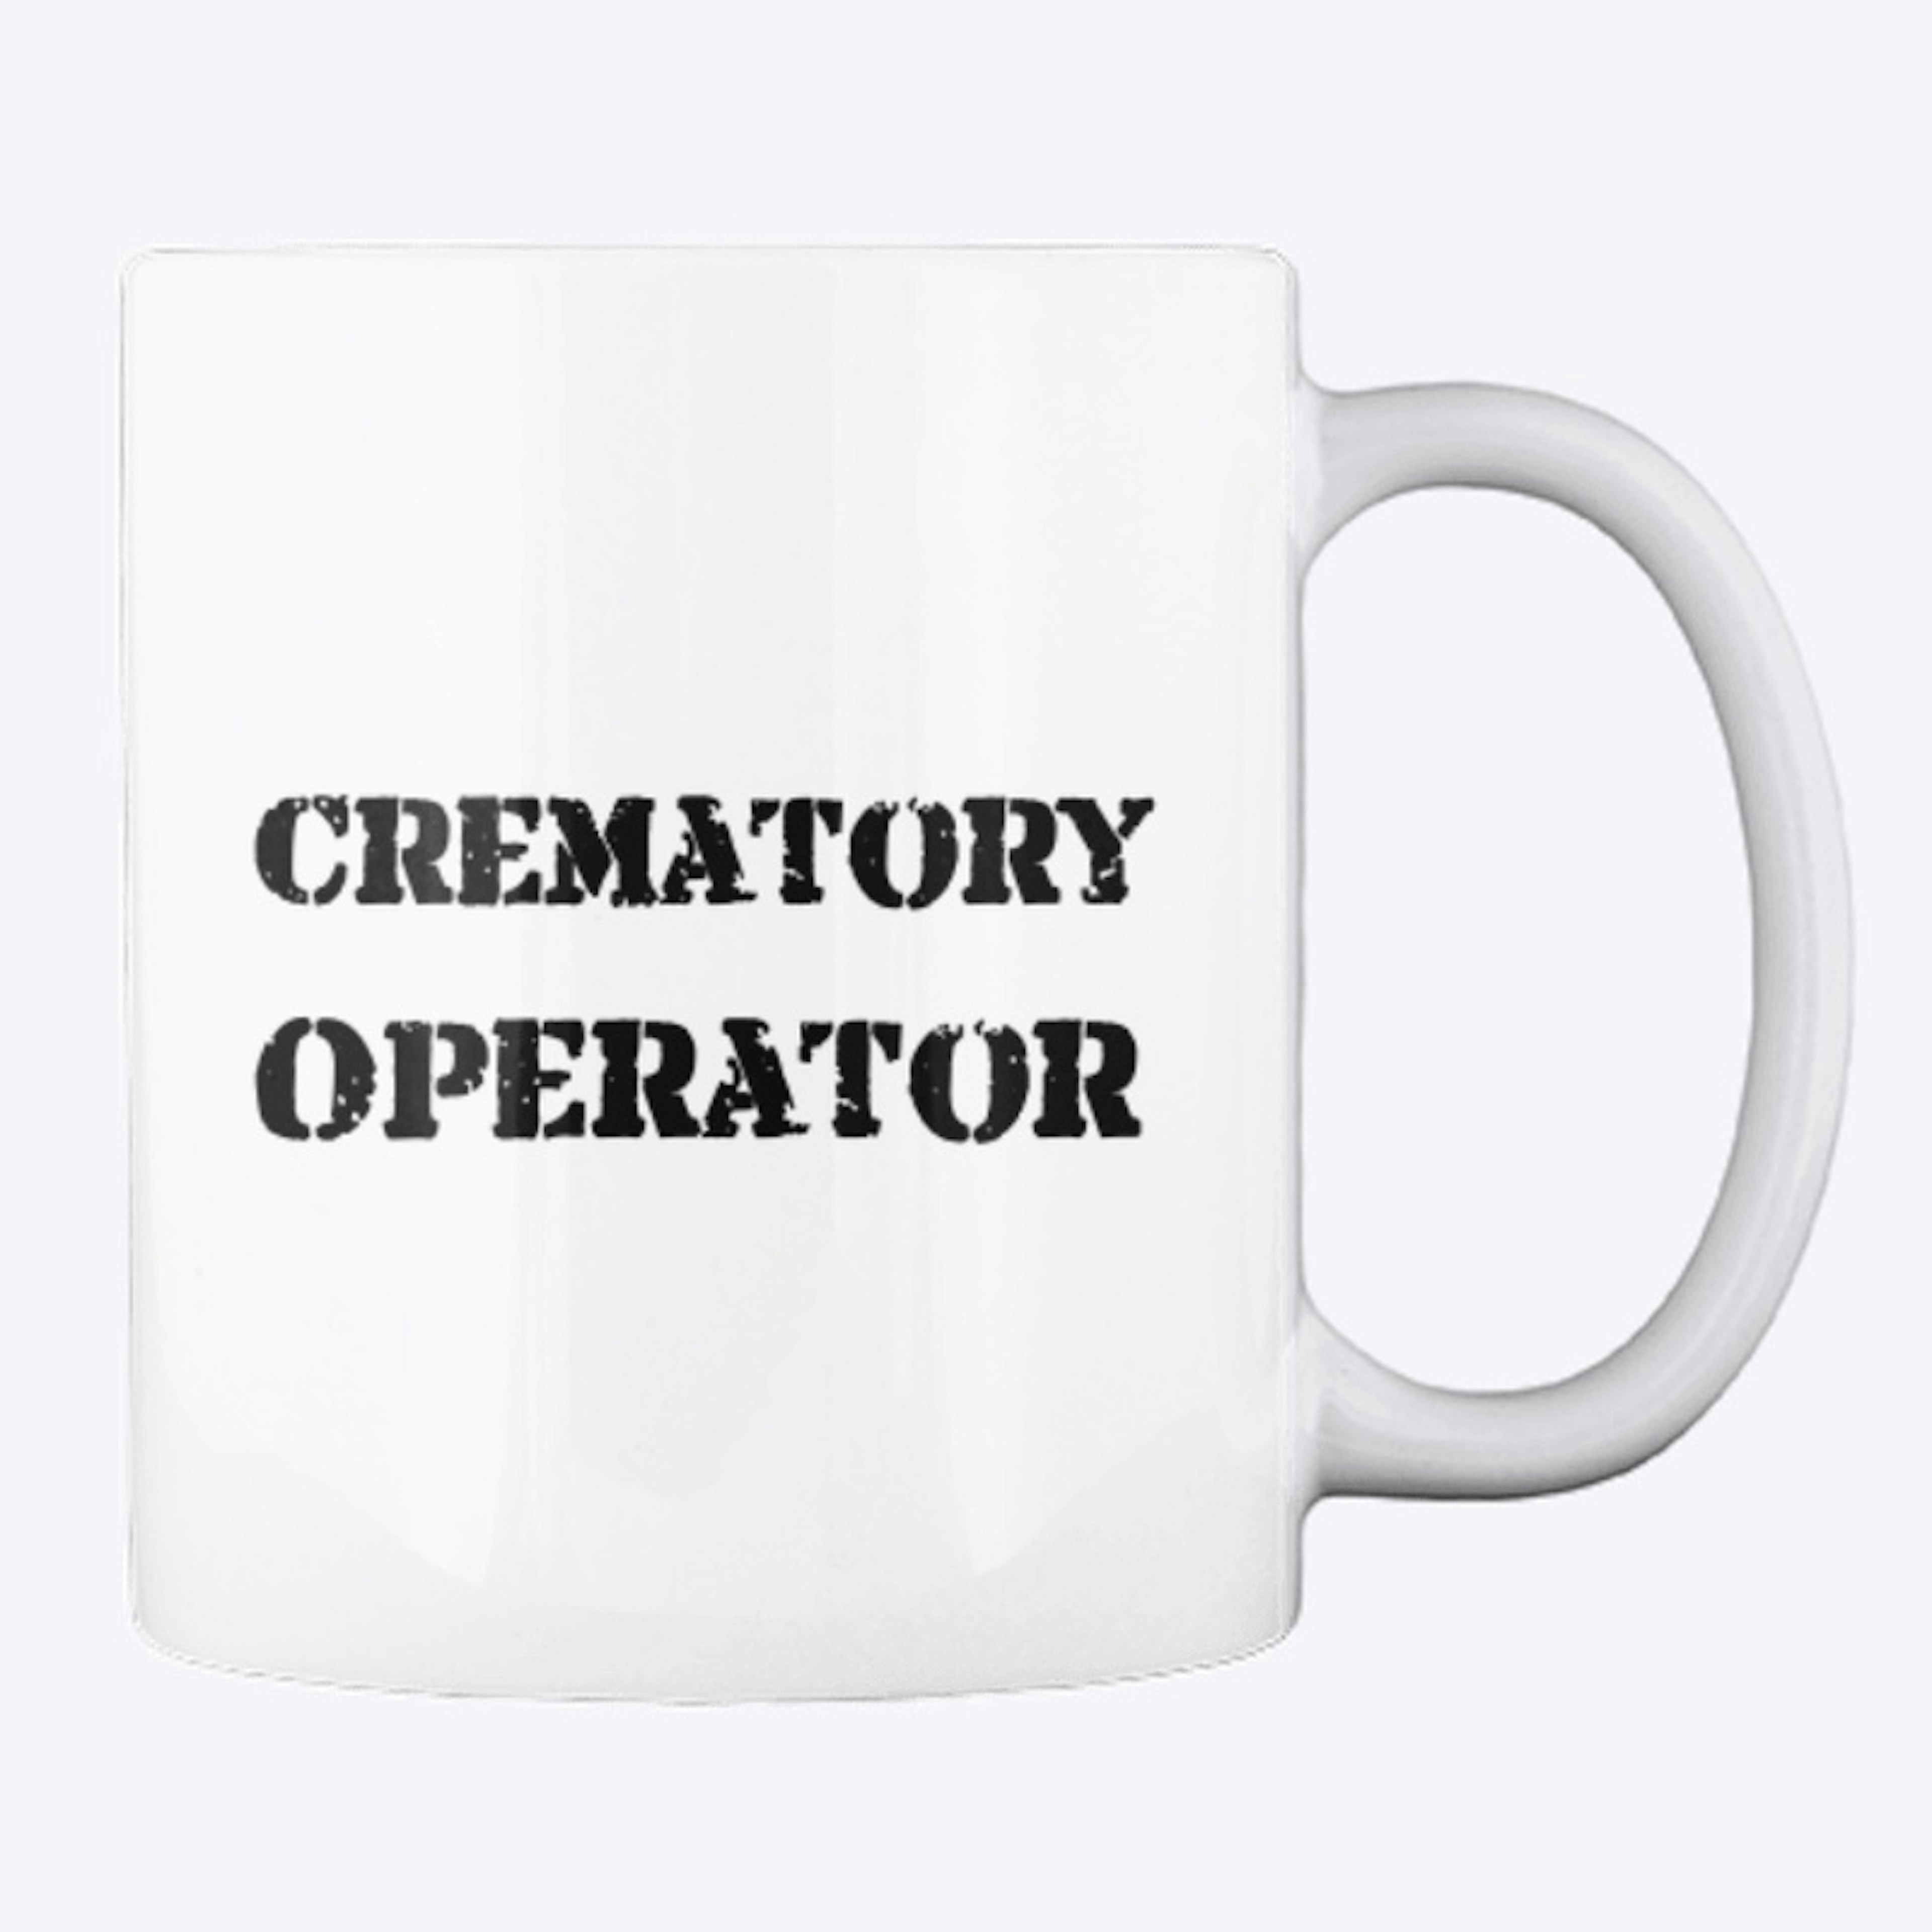 Crematory Operator Mug